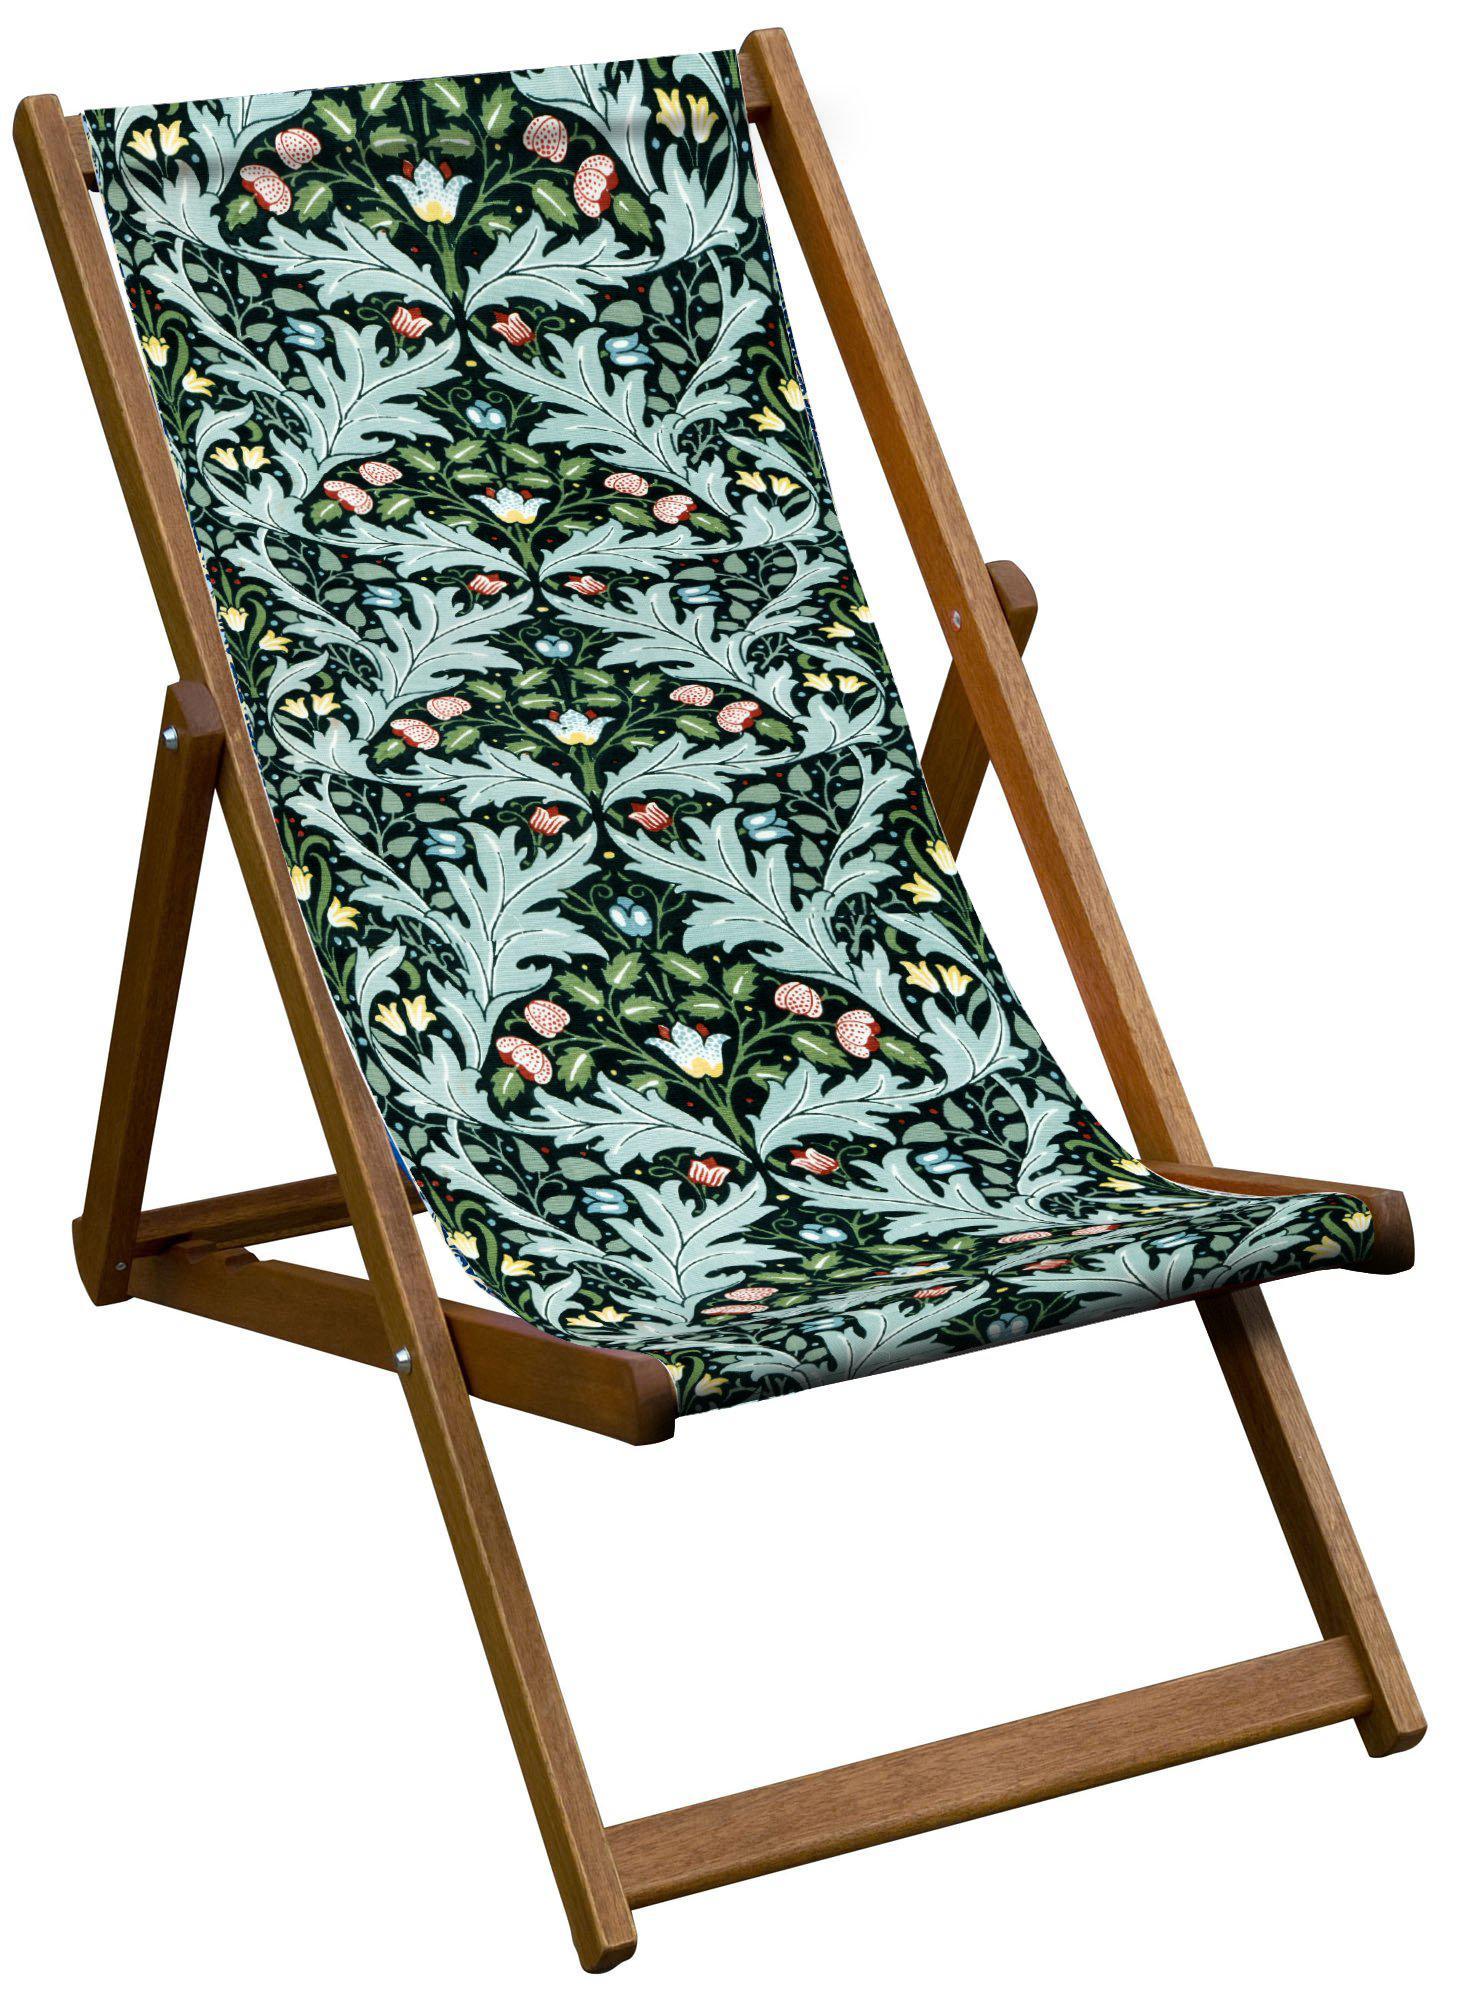 Yare - William Morris Deckchair